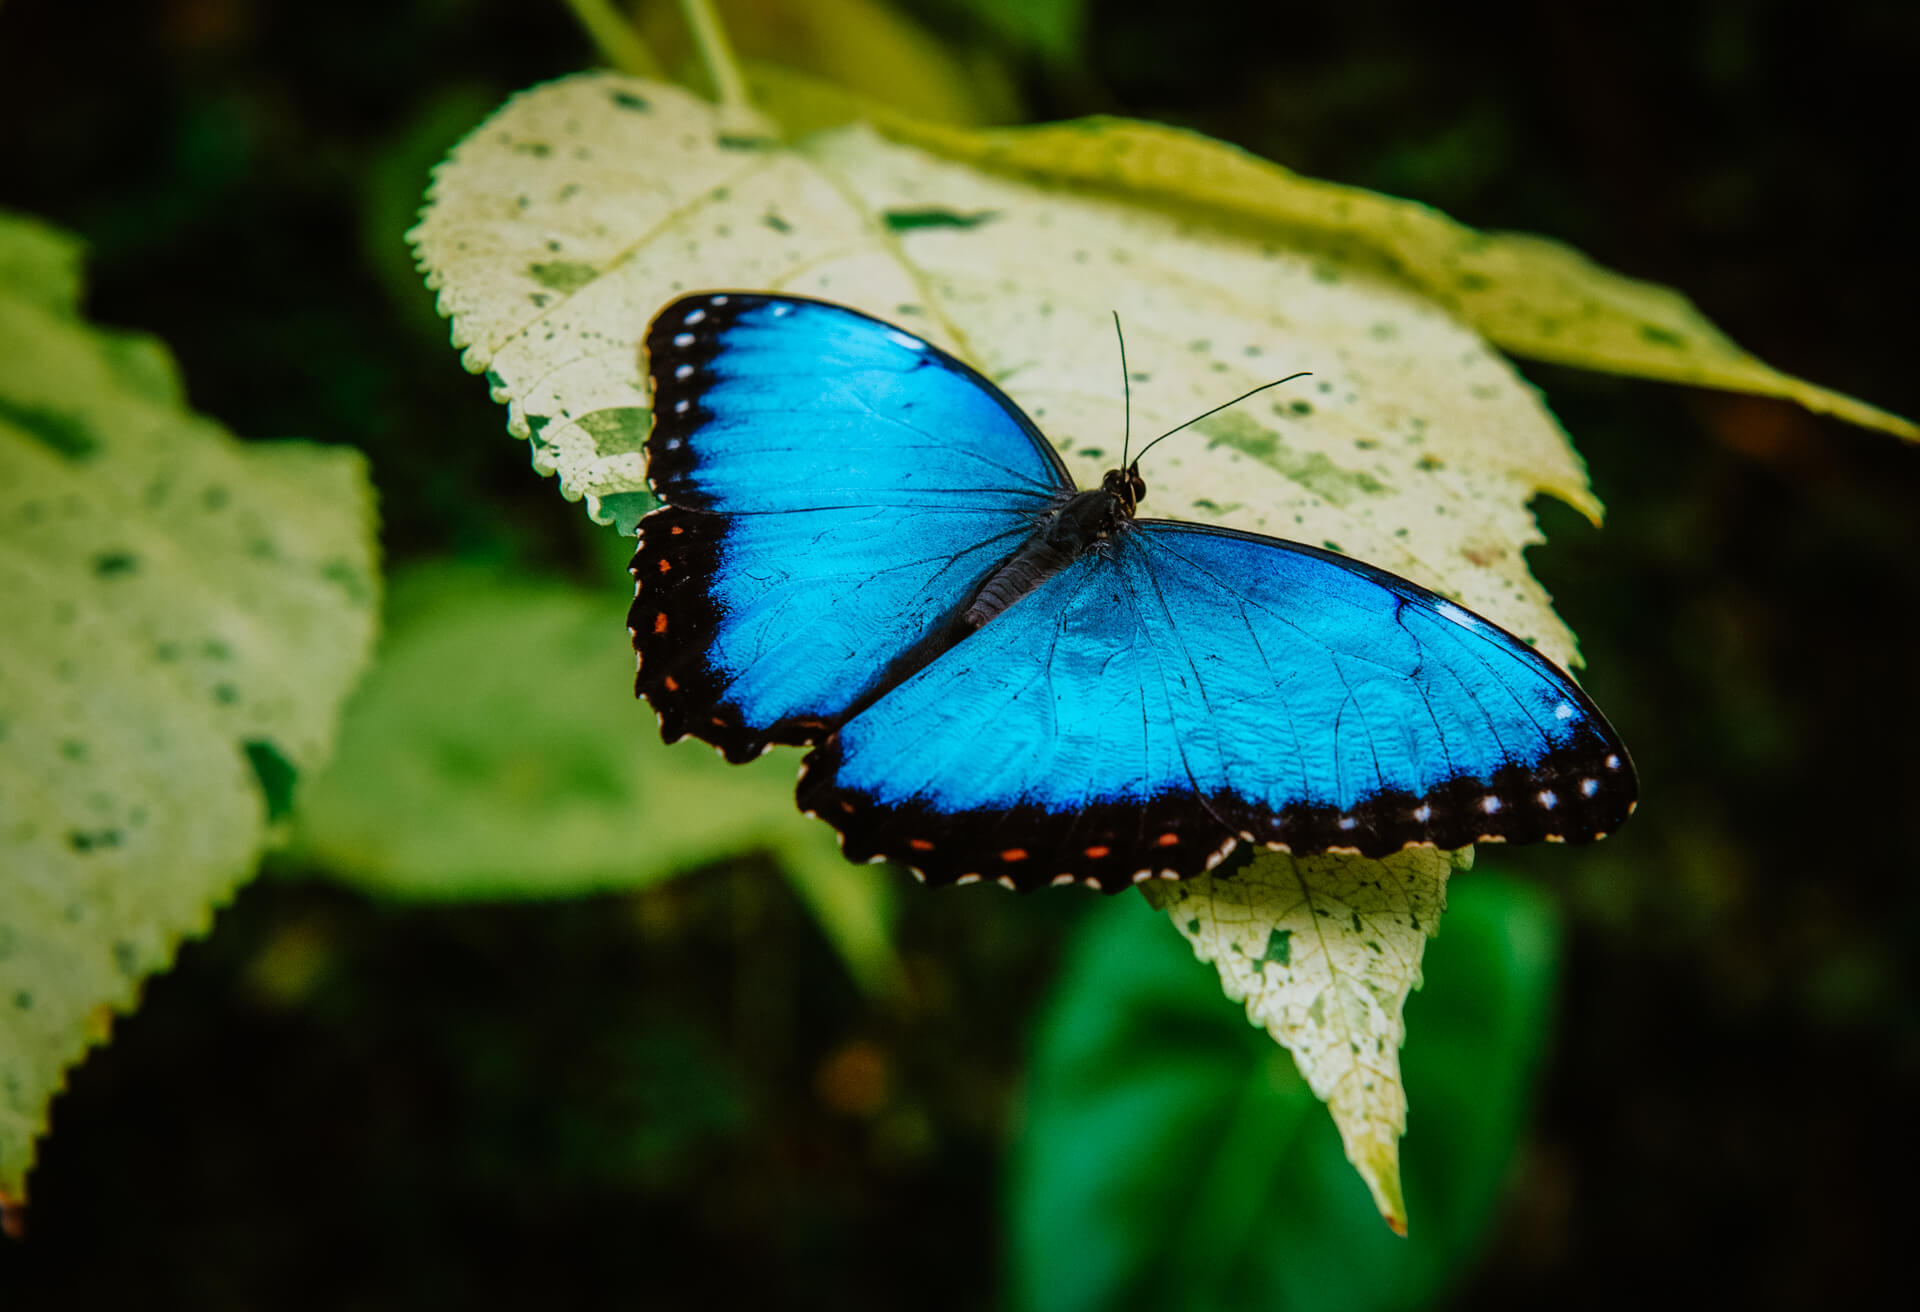 blue butterfly costa rica